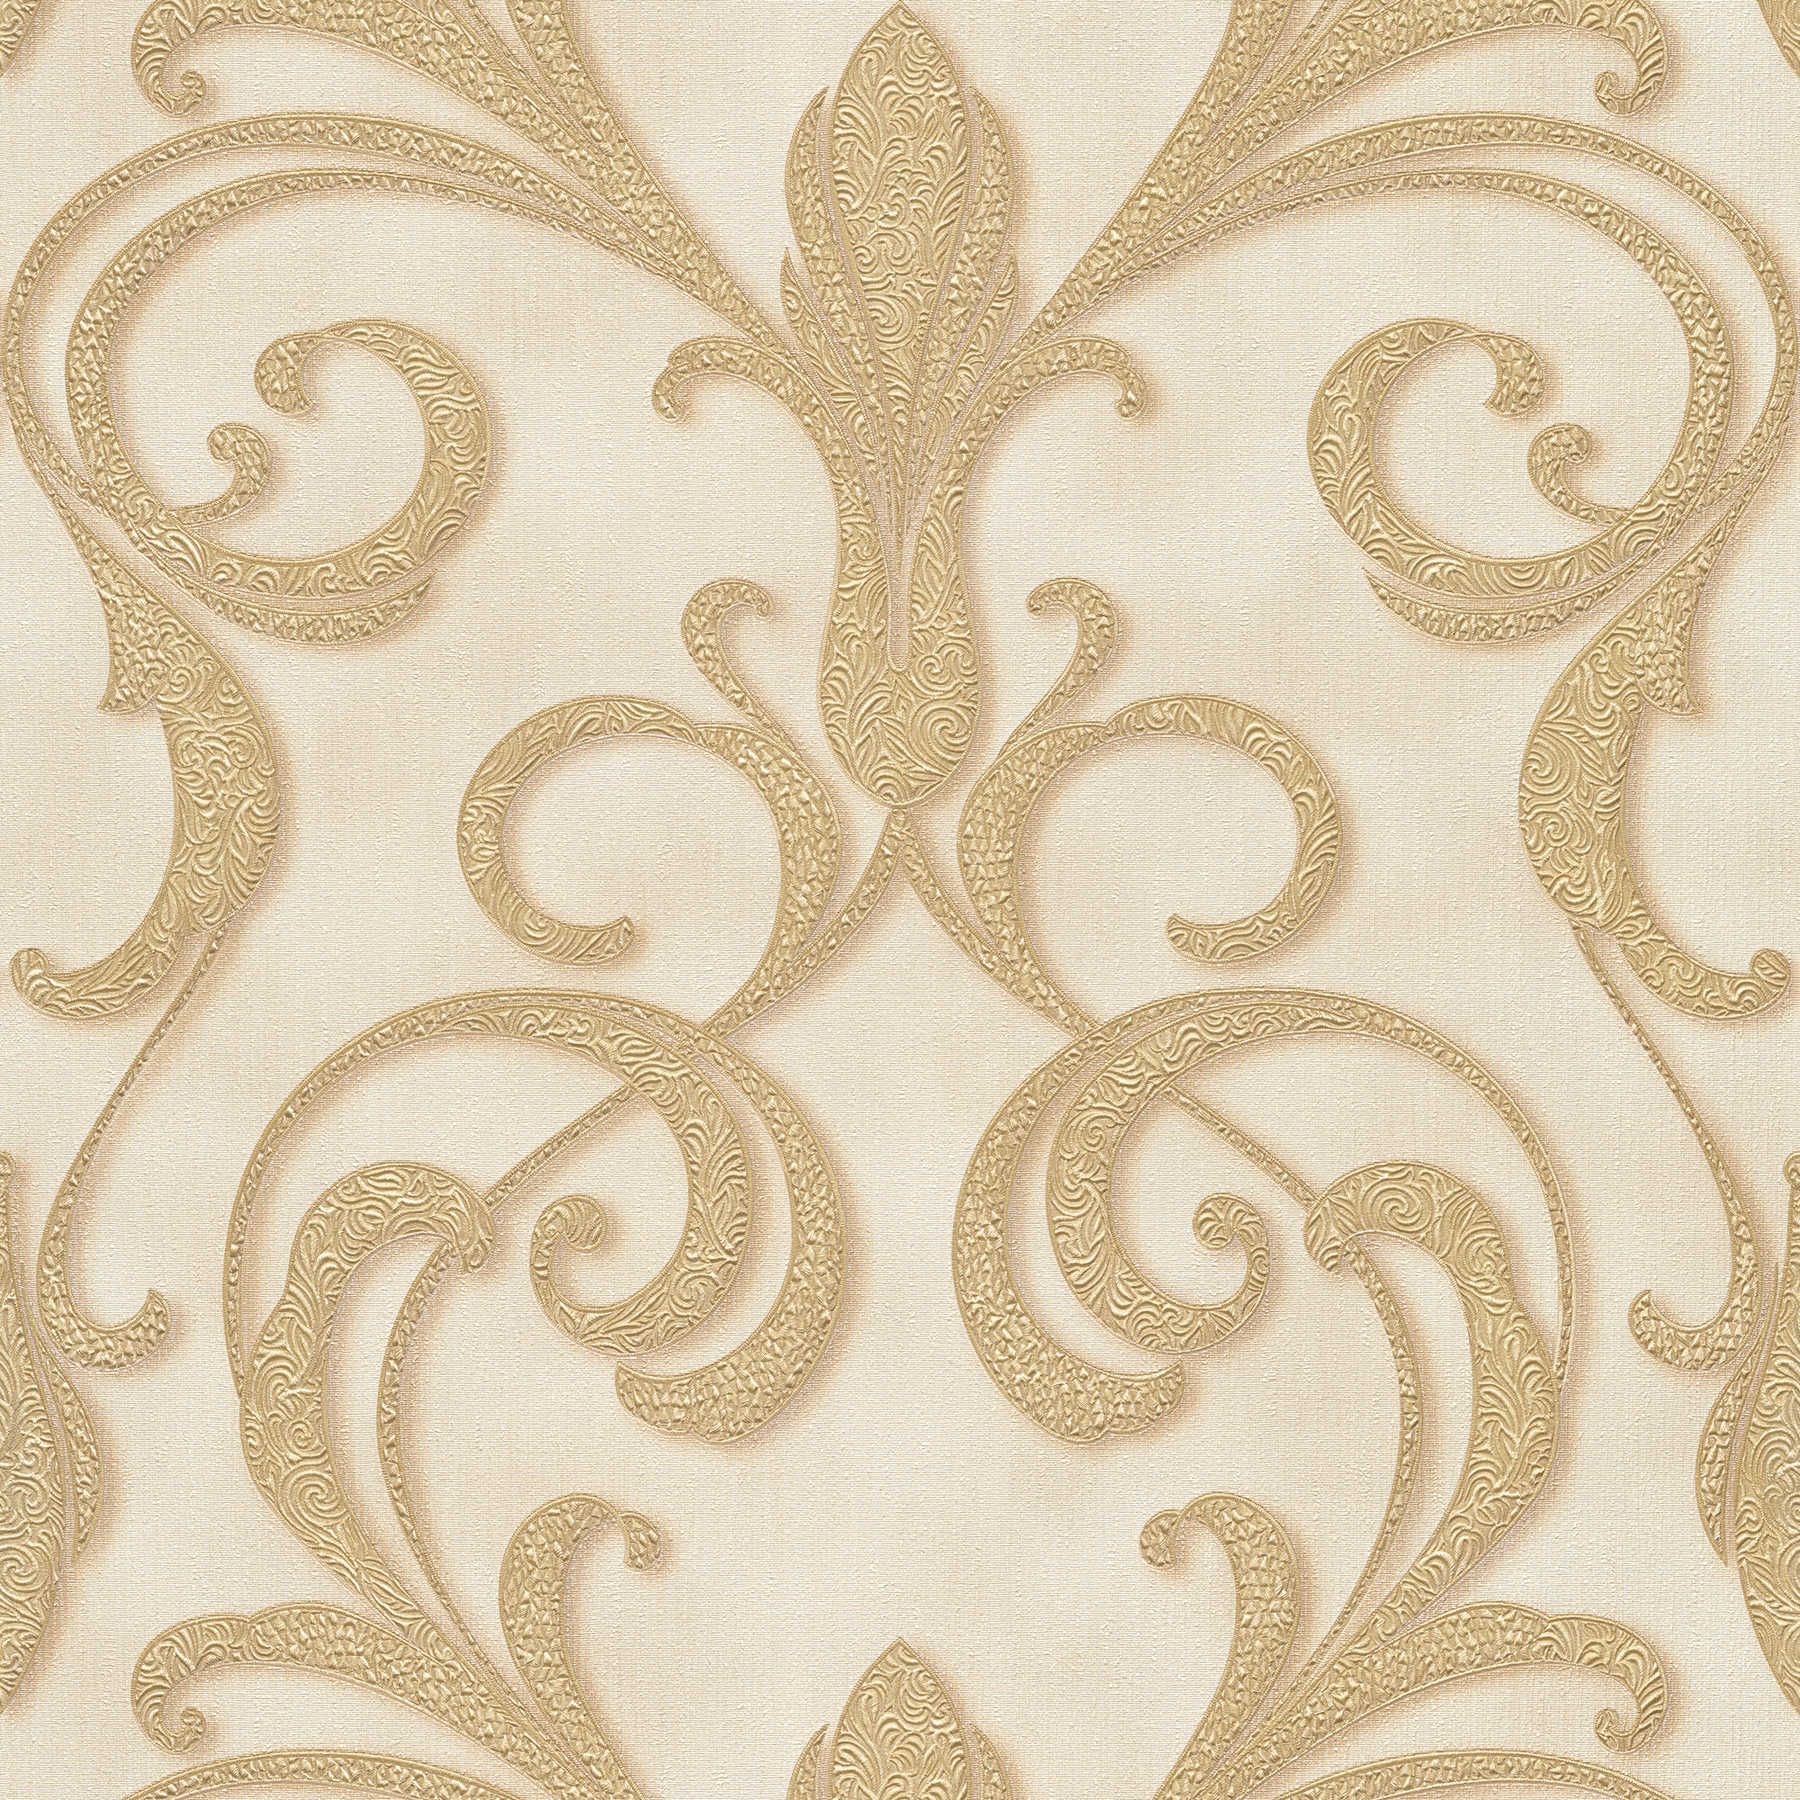 Metallic wallpaper with filigree ornament pattern - cream
